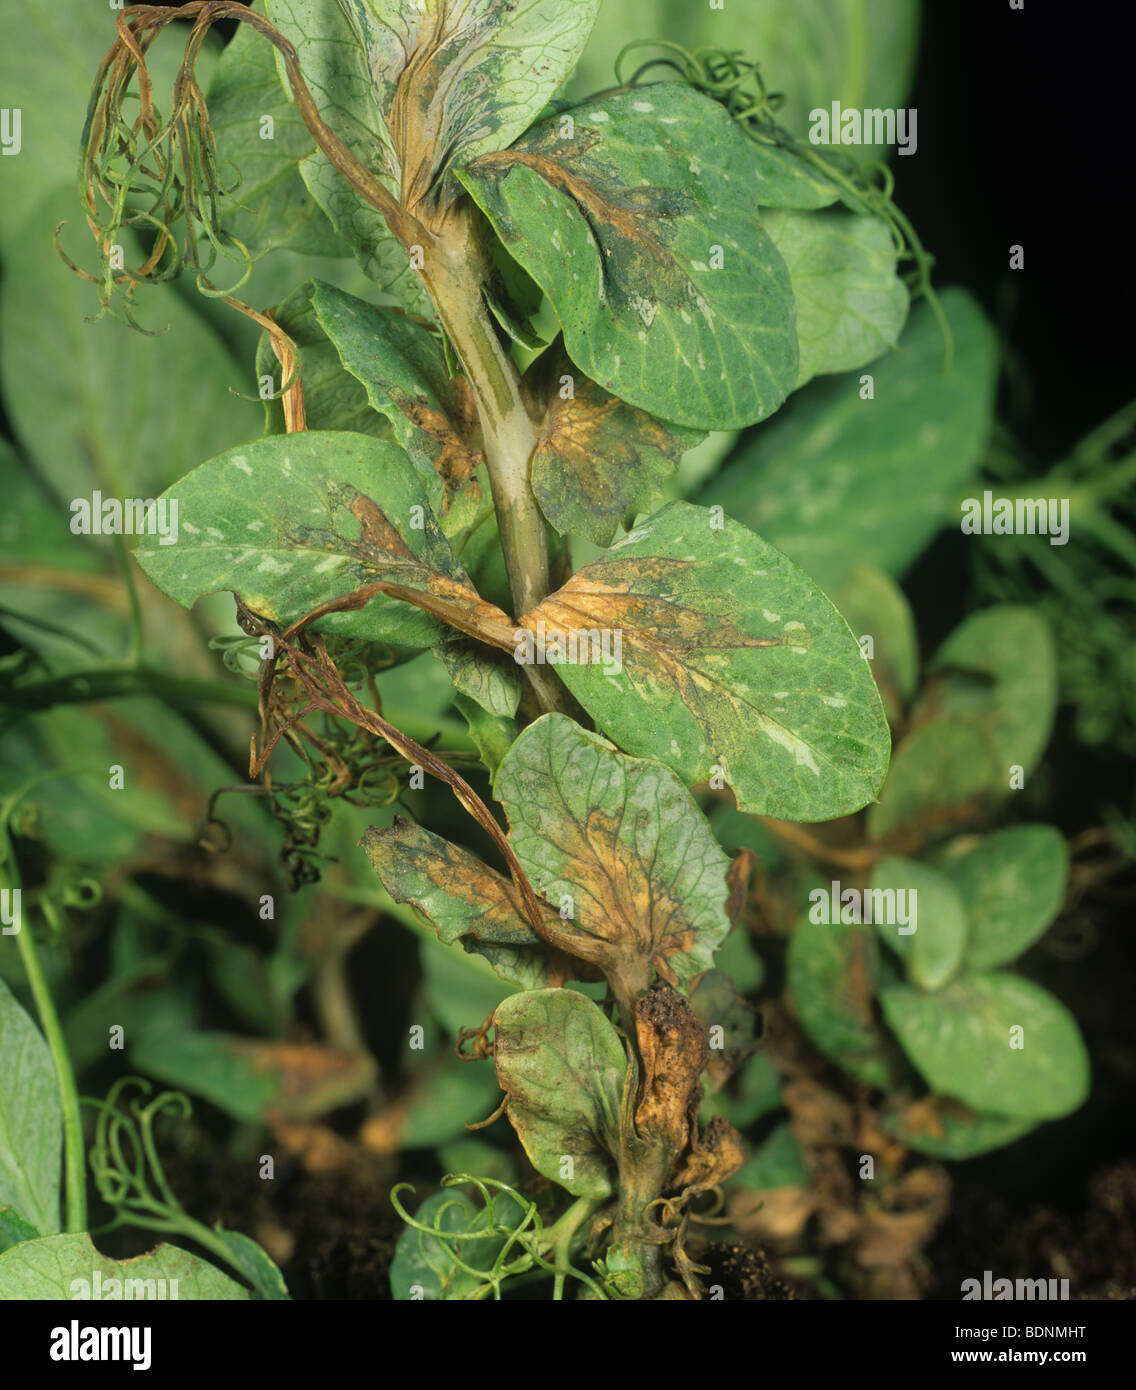 Bacterial blight (Pseudomonas syringae) symptoms on pea stem & leaves Stock Photo